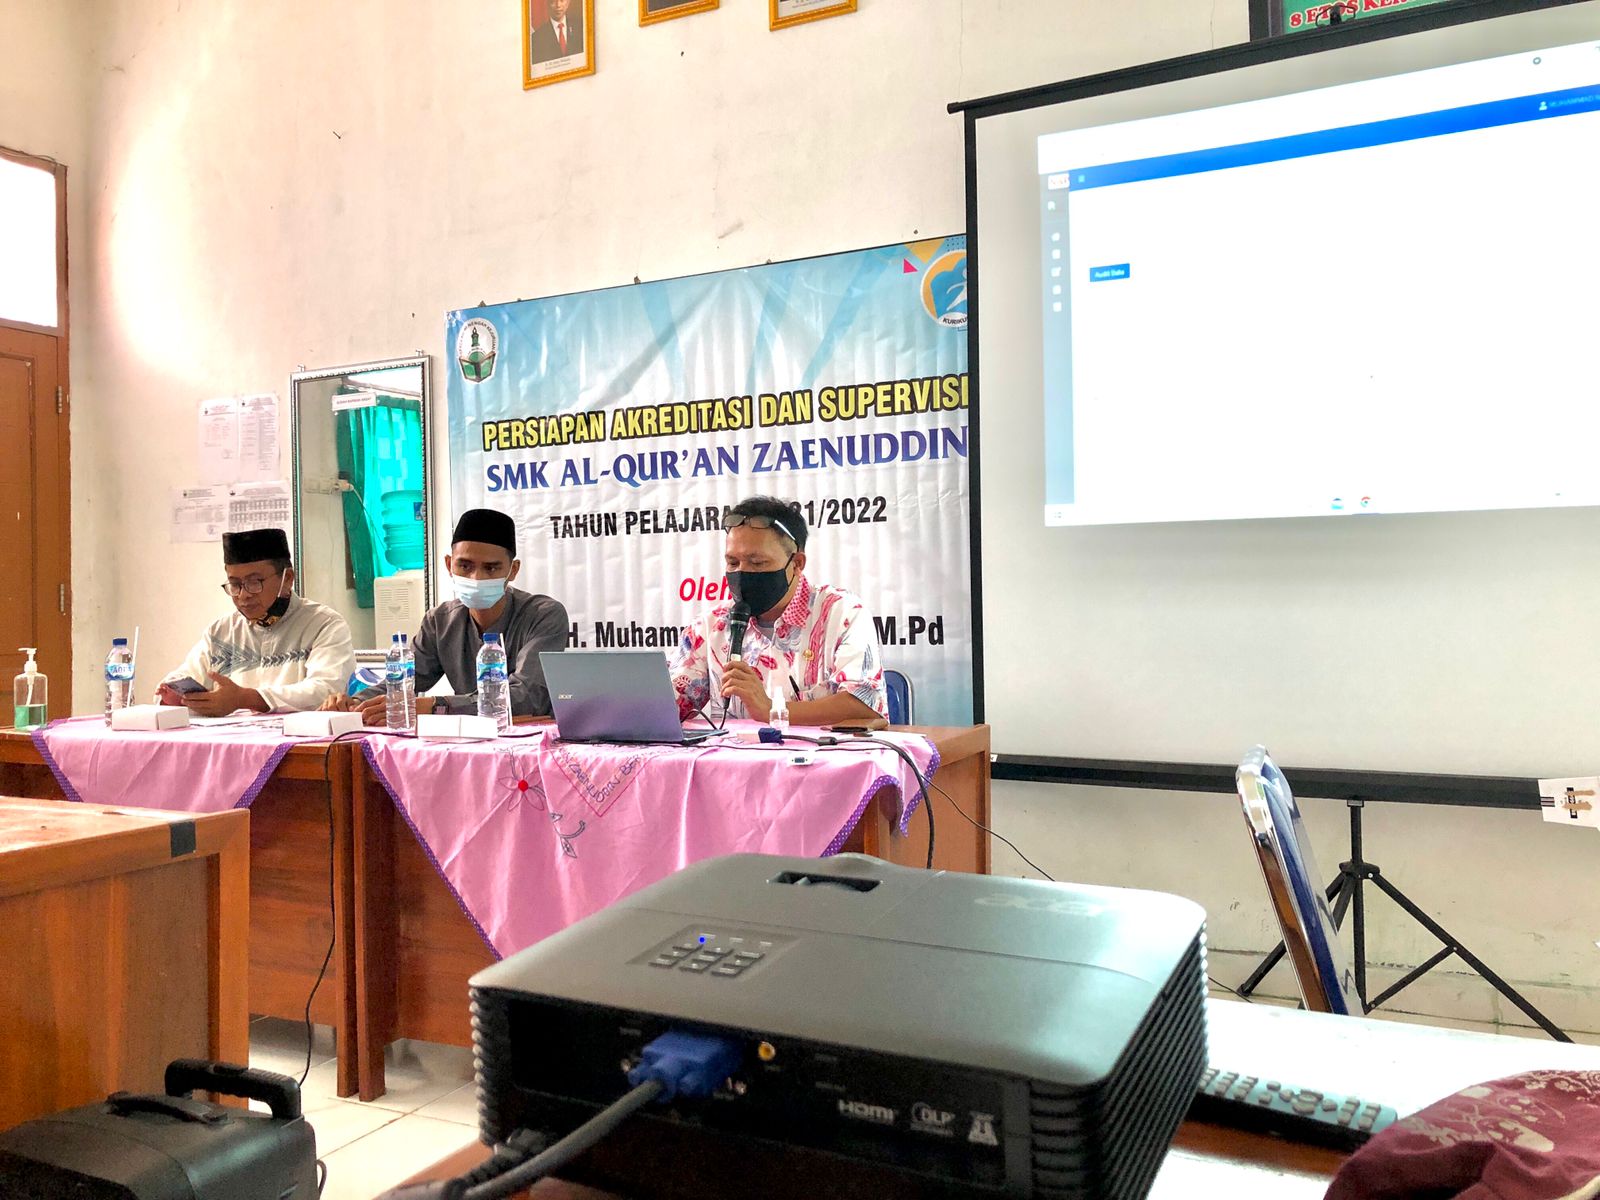 Persiapan Akreditasi dan Supervisi SMK Al-Qur’an Zaenuddin